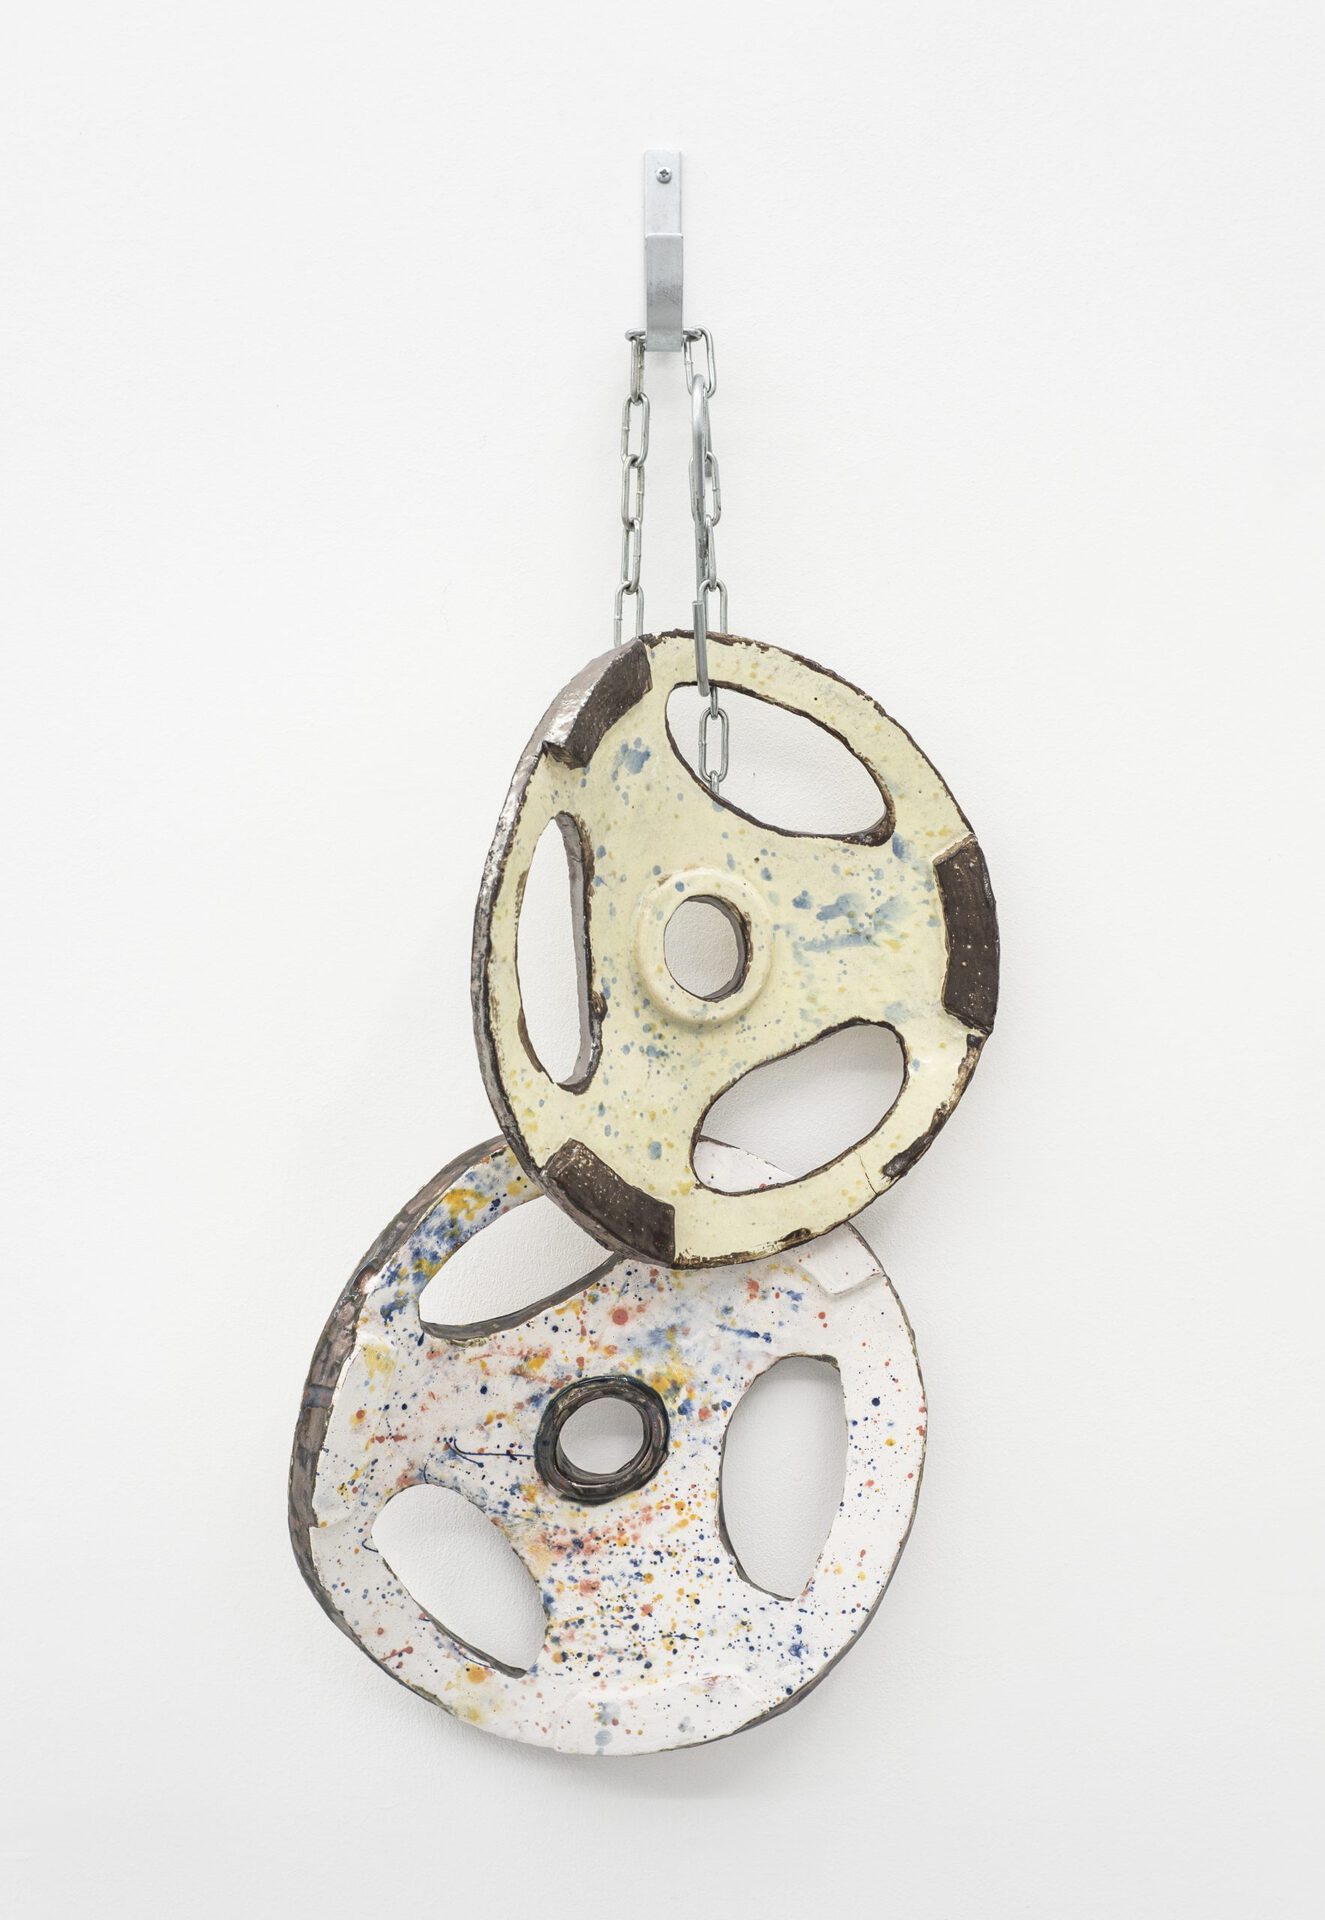 Harry Hachmeister, Hook & Crook, glazed ceramic, hook, steel chain, 57 x 34 x 10 cm, 2020